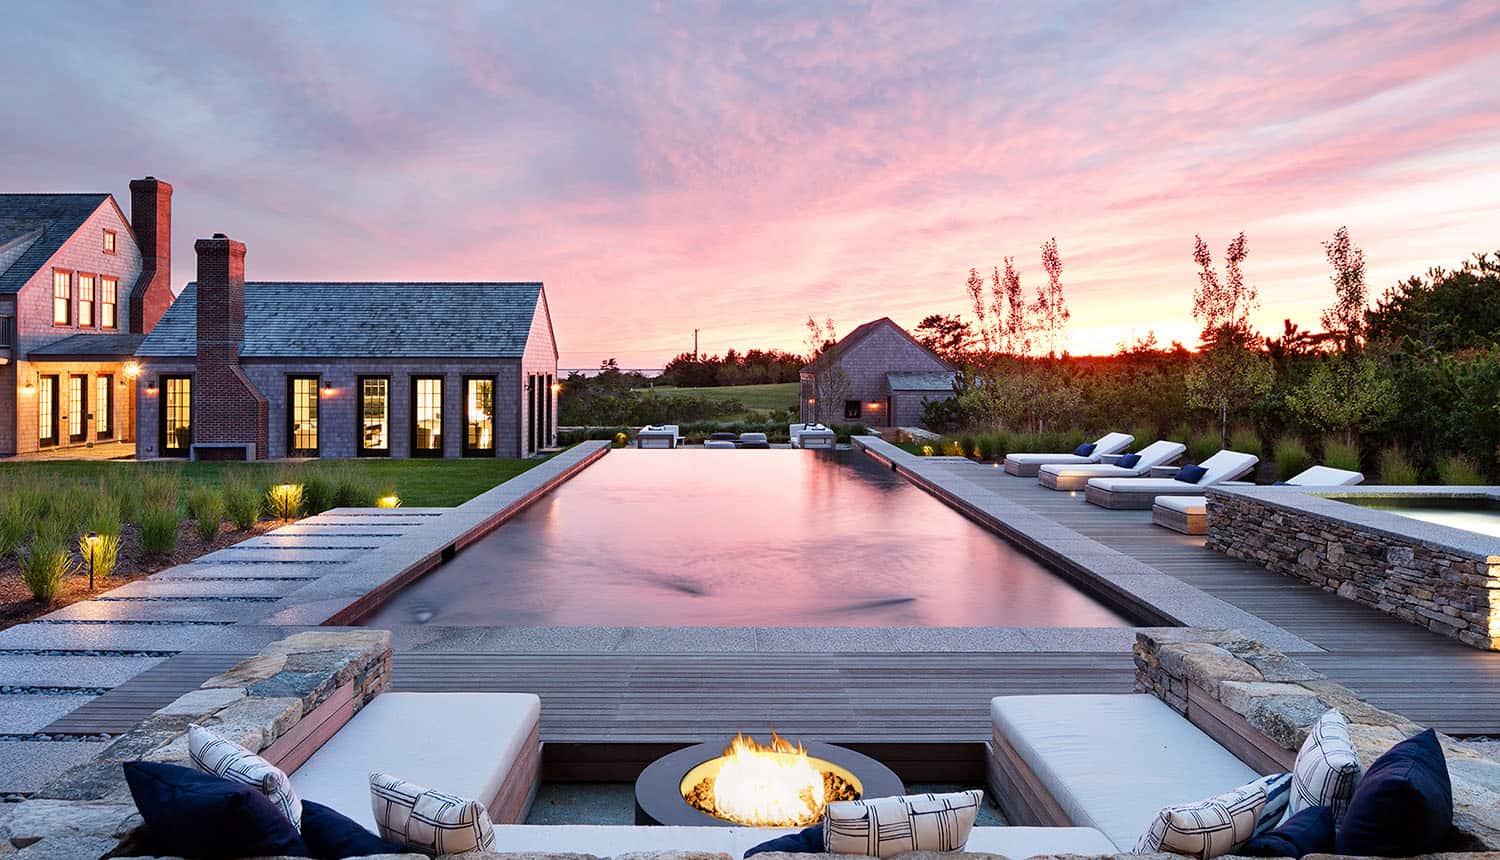 Explore this stunning beach house retreat on the island of Nantucket